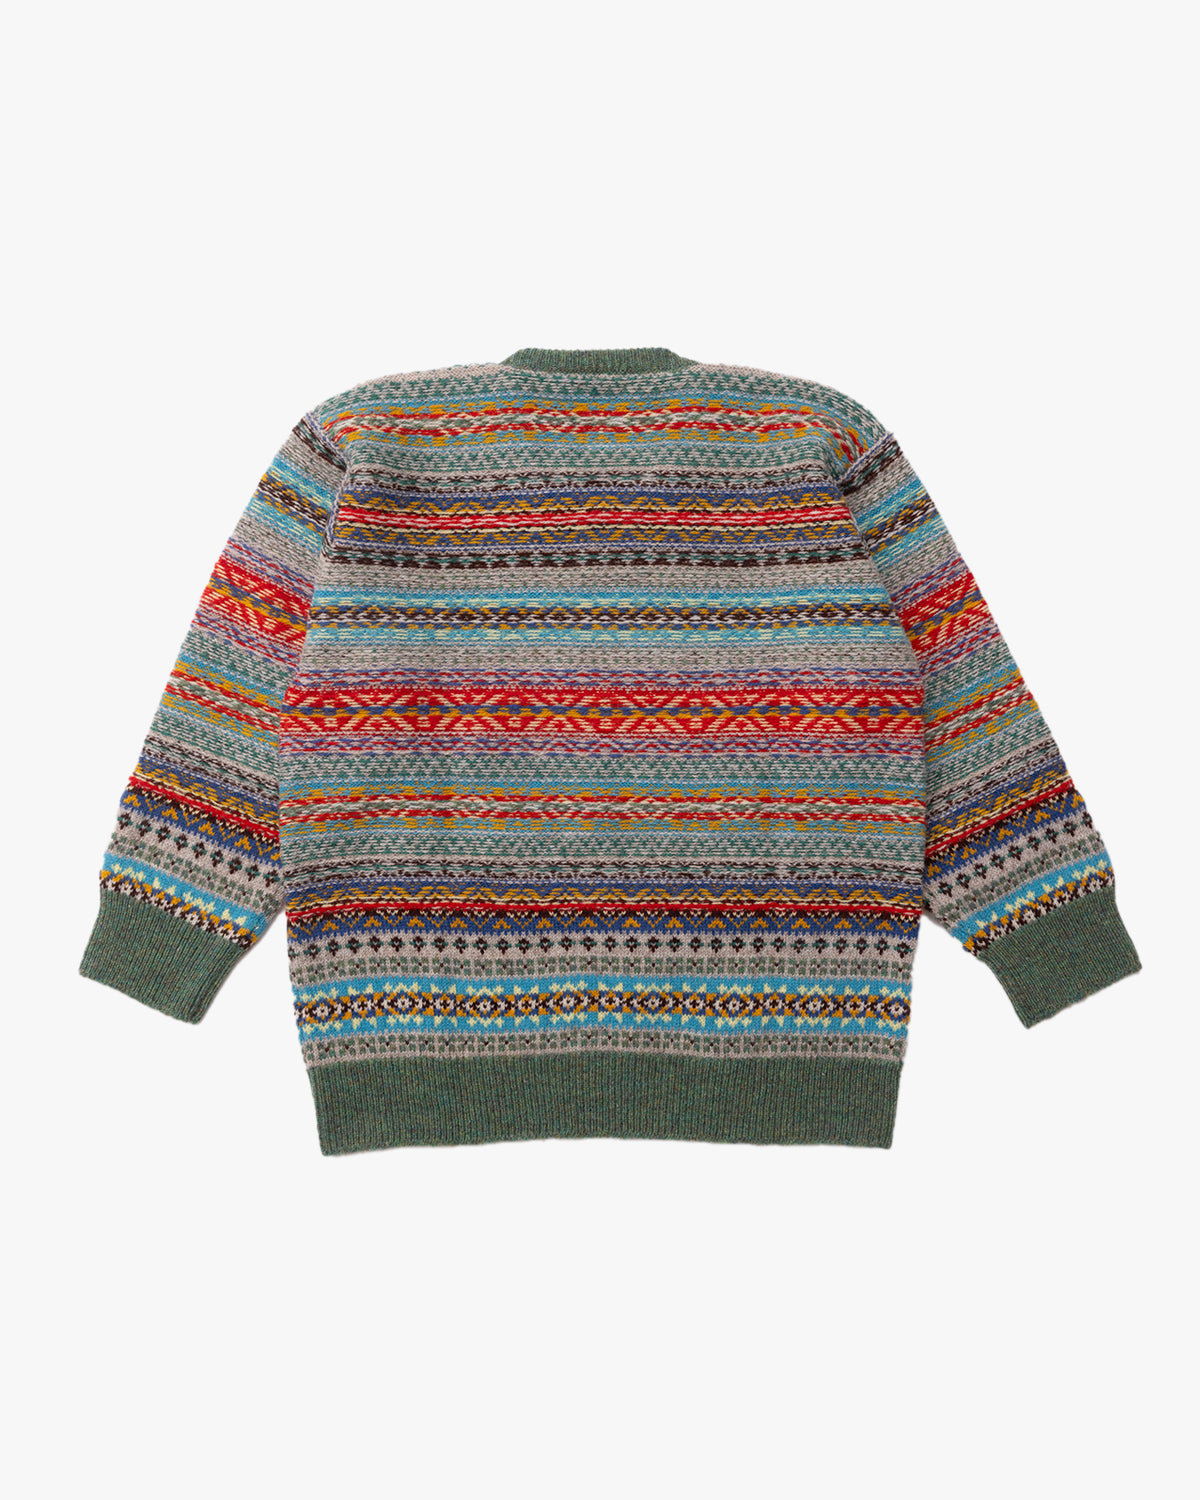 Jamieson's x Kota Gushiken Reverse Stitch Fair Isle Sweater